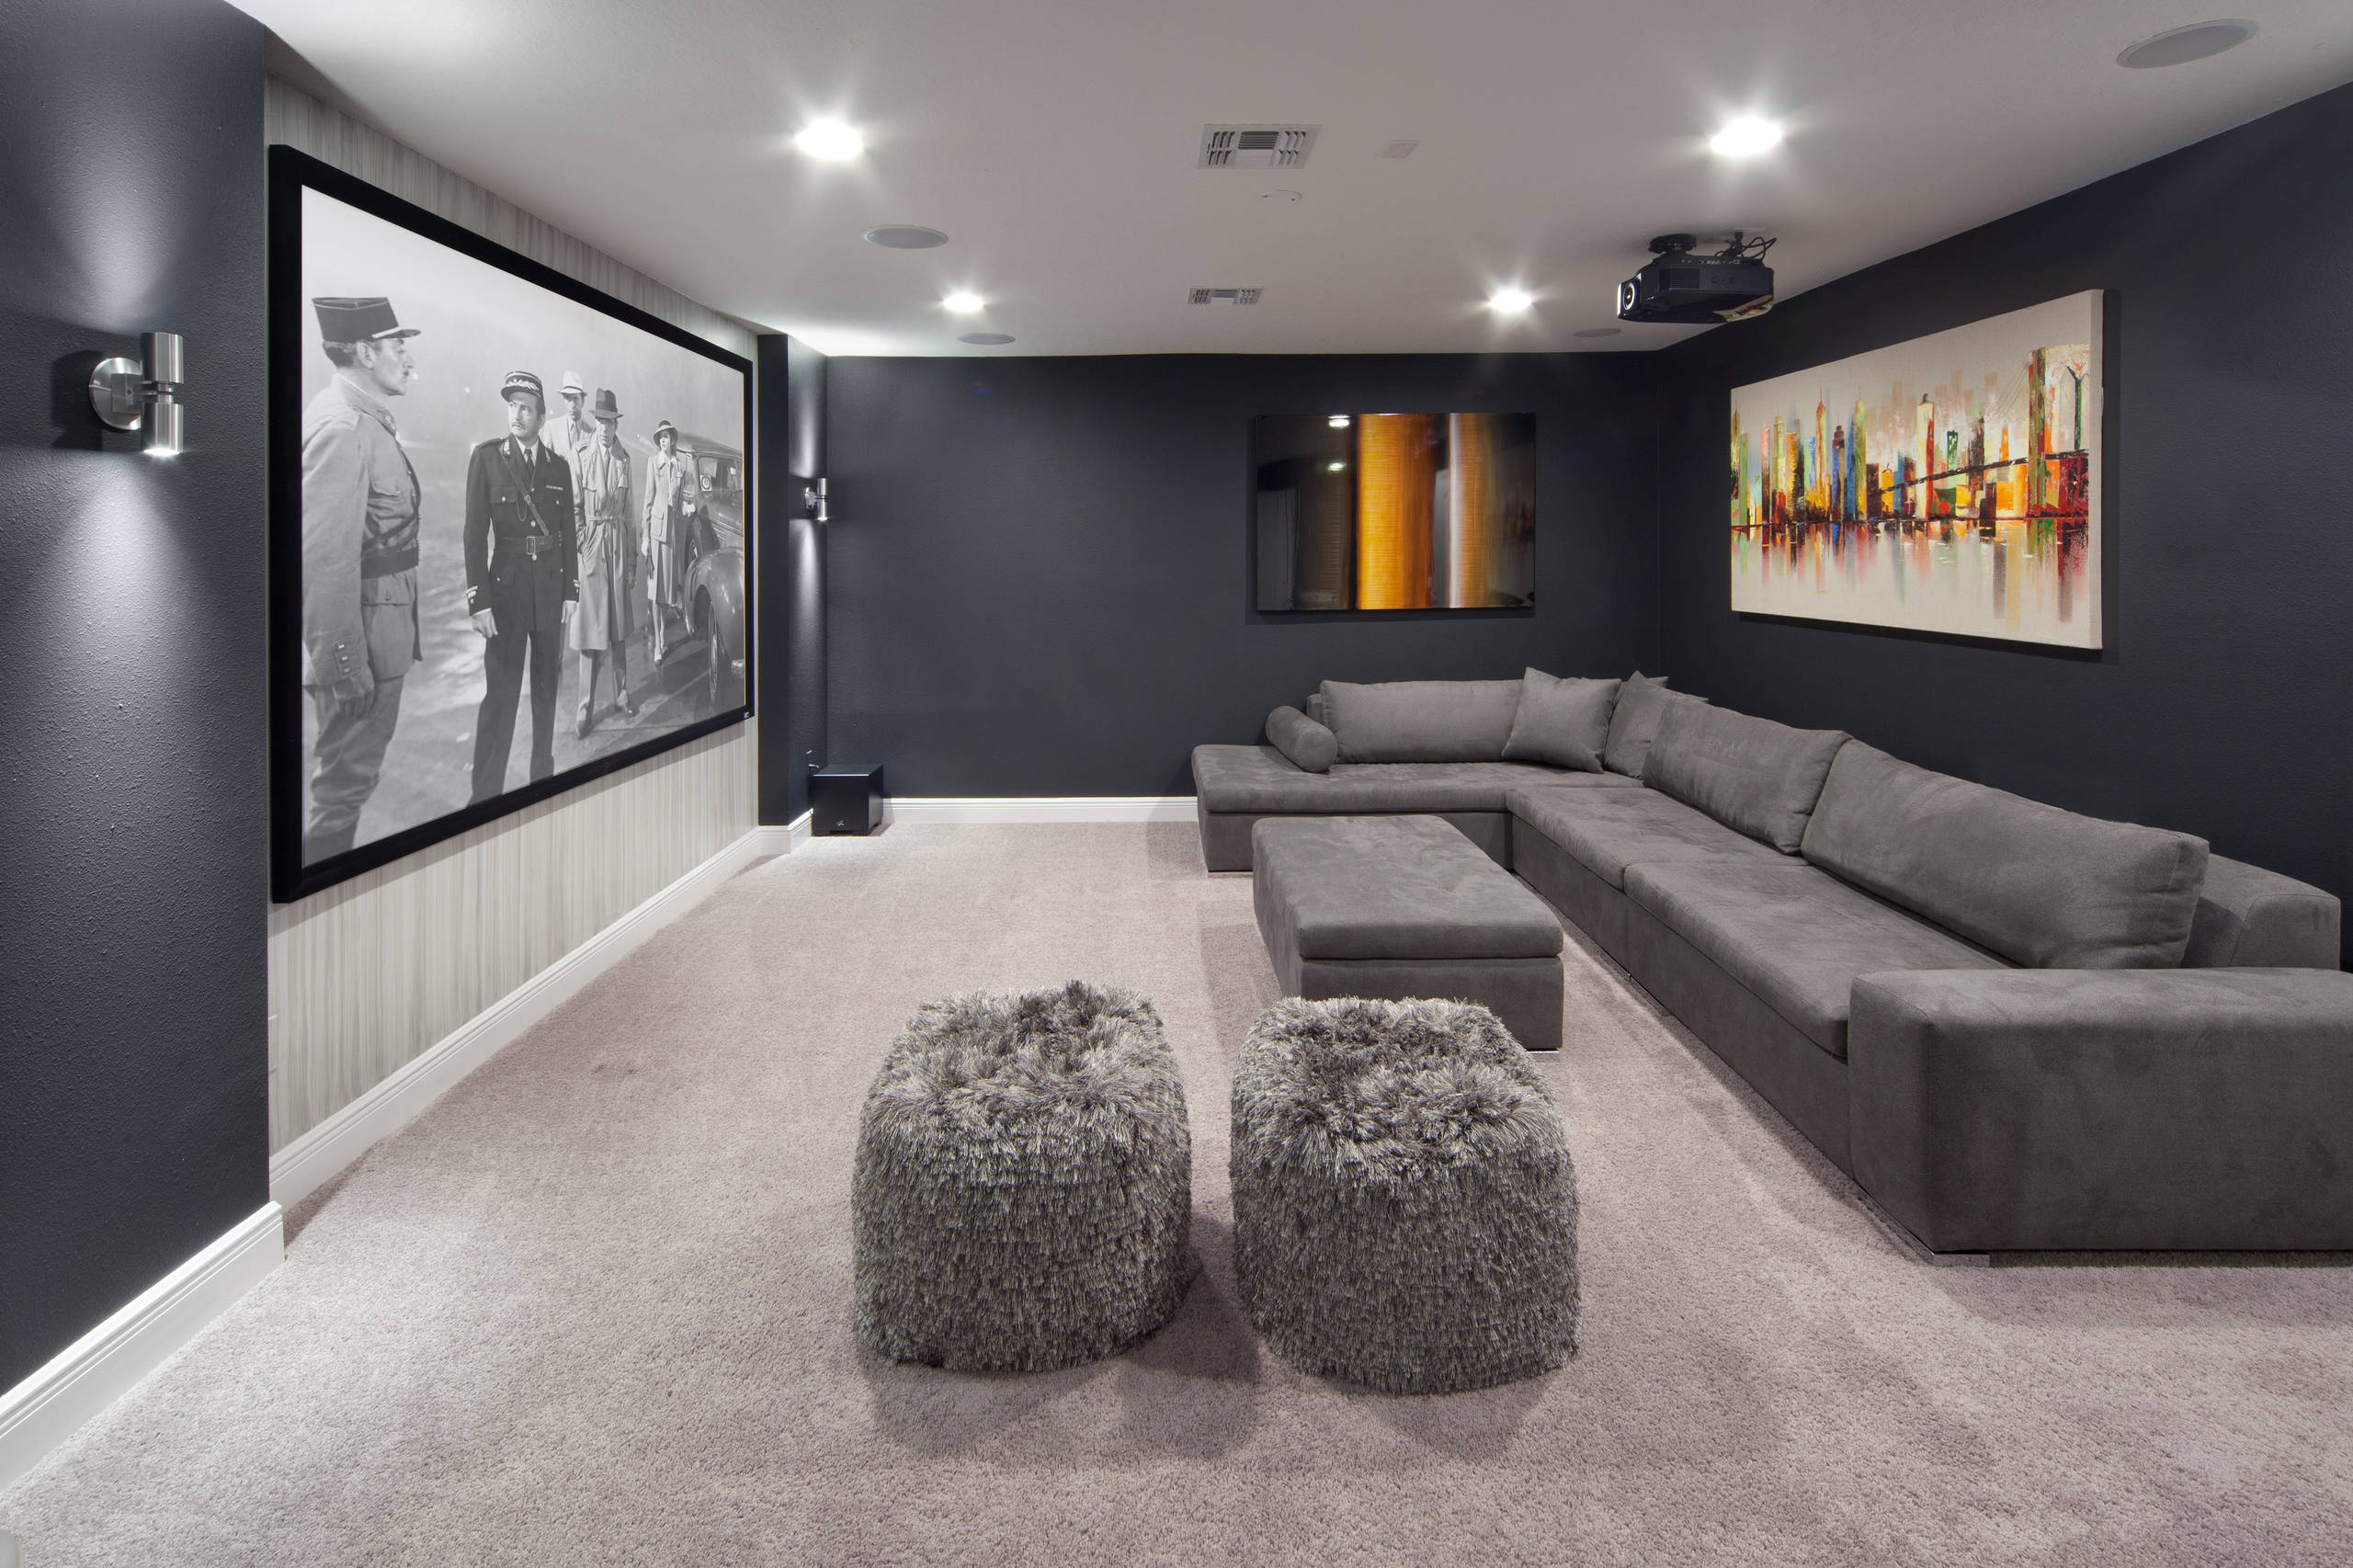 8 Home Theater Ideas for Ultimate Movie Viewing - Decorilla Online Interior  Design